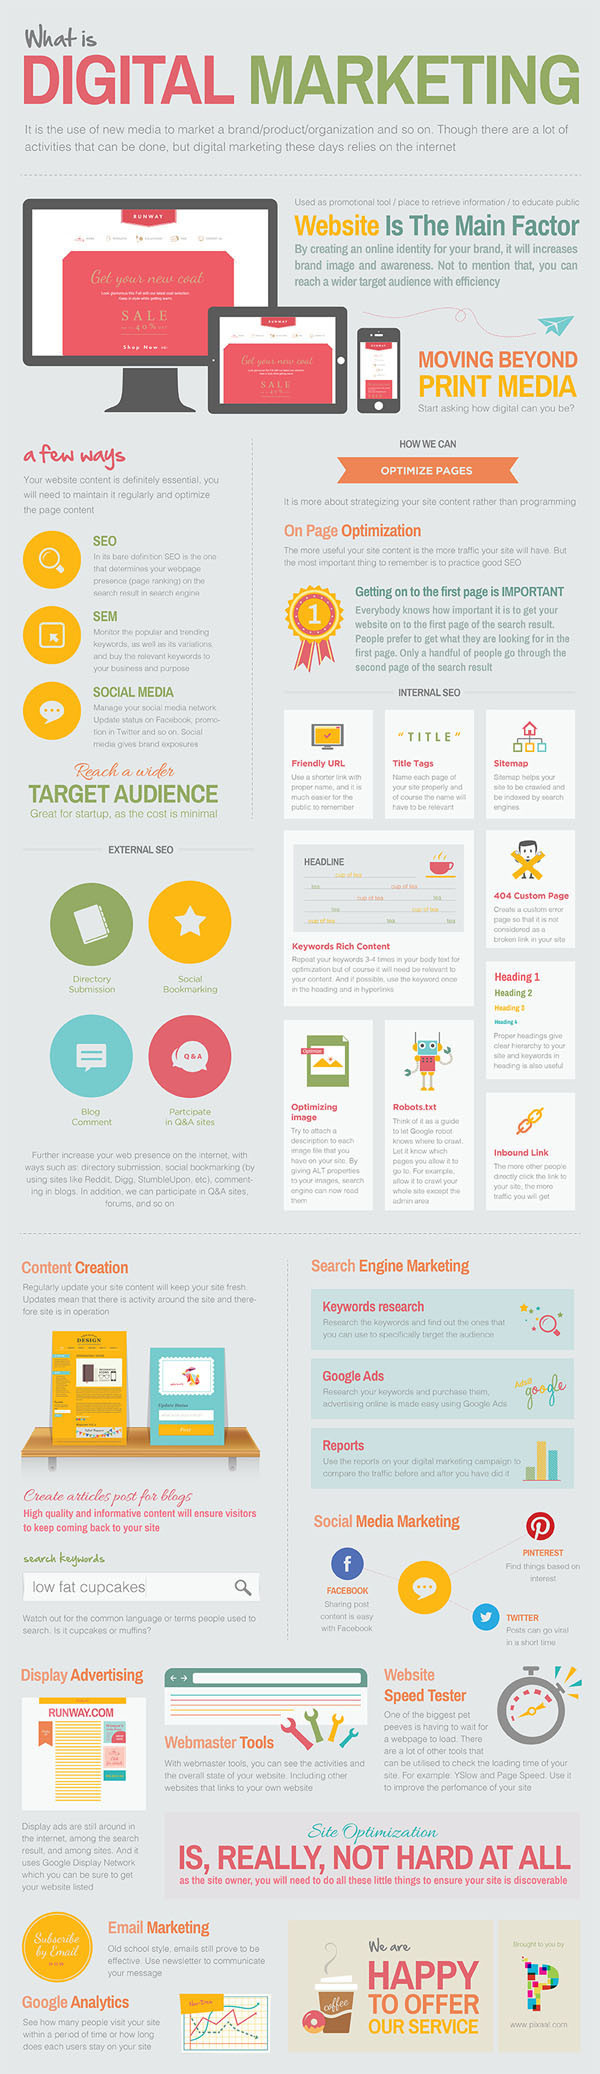 Infographic design idea #183: What is Digital Marketing ? [Infographic] #infographic